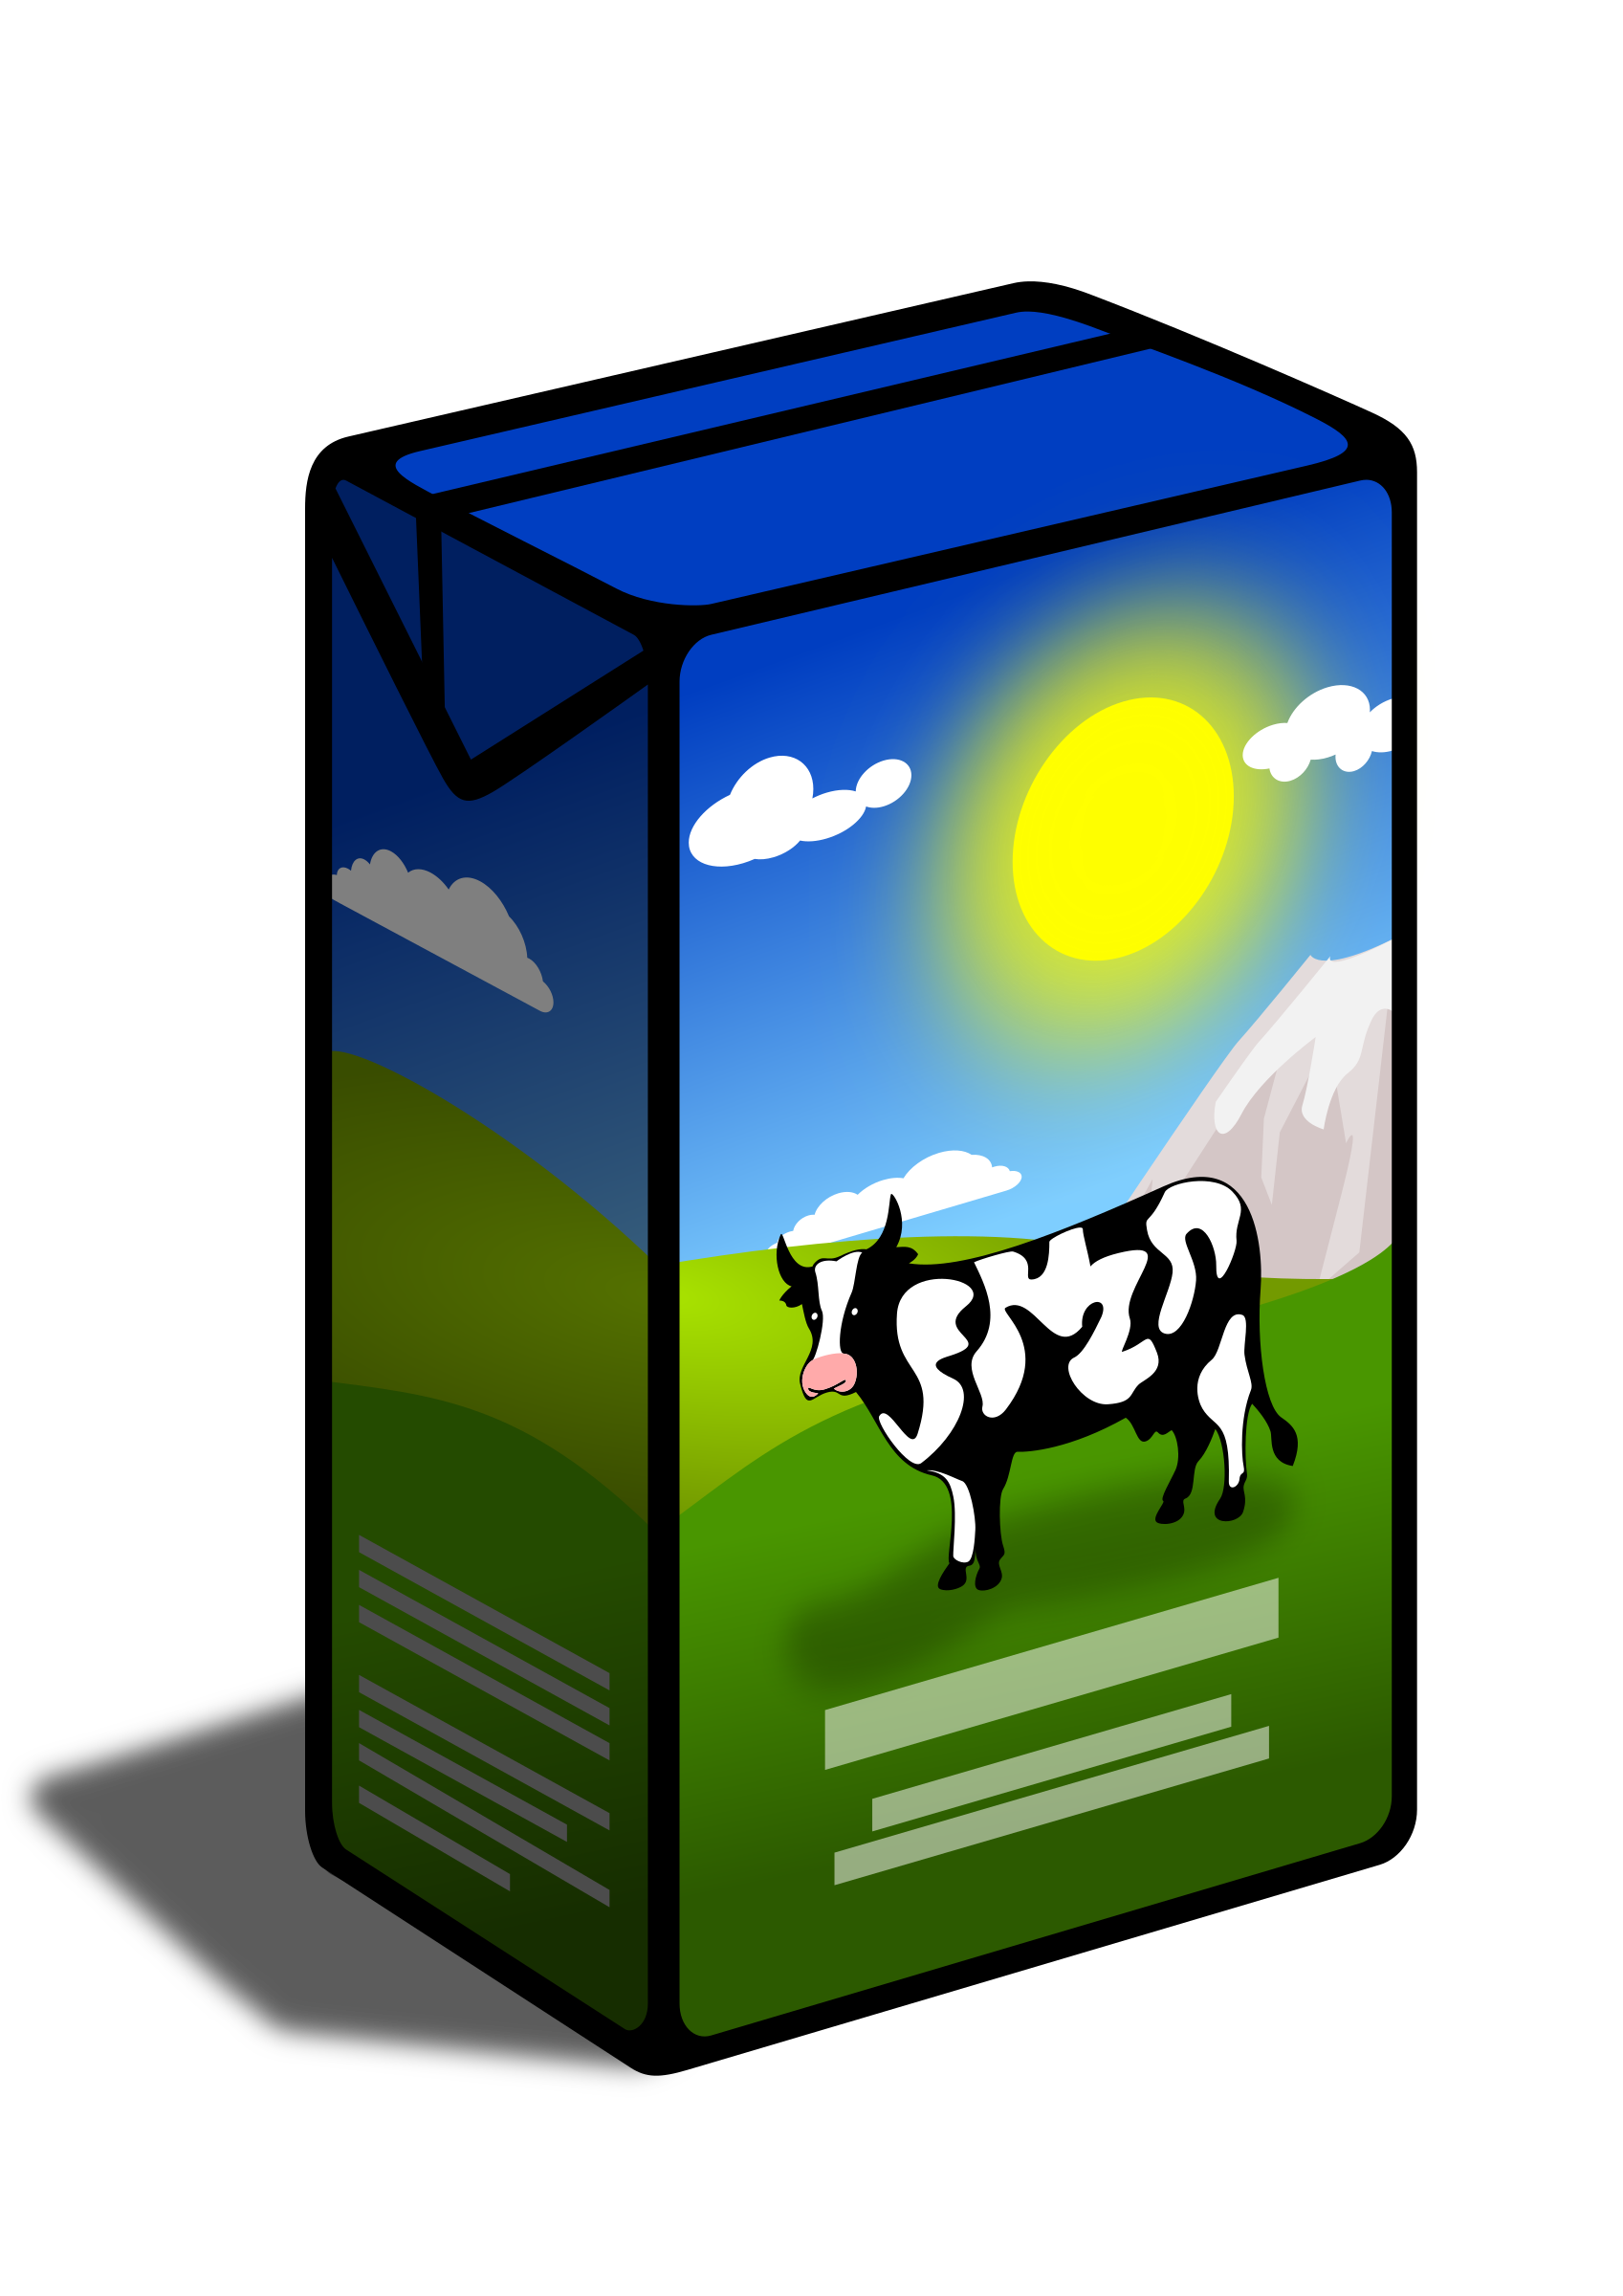 Milk Jar clipart. Free download transparent .PNG